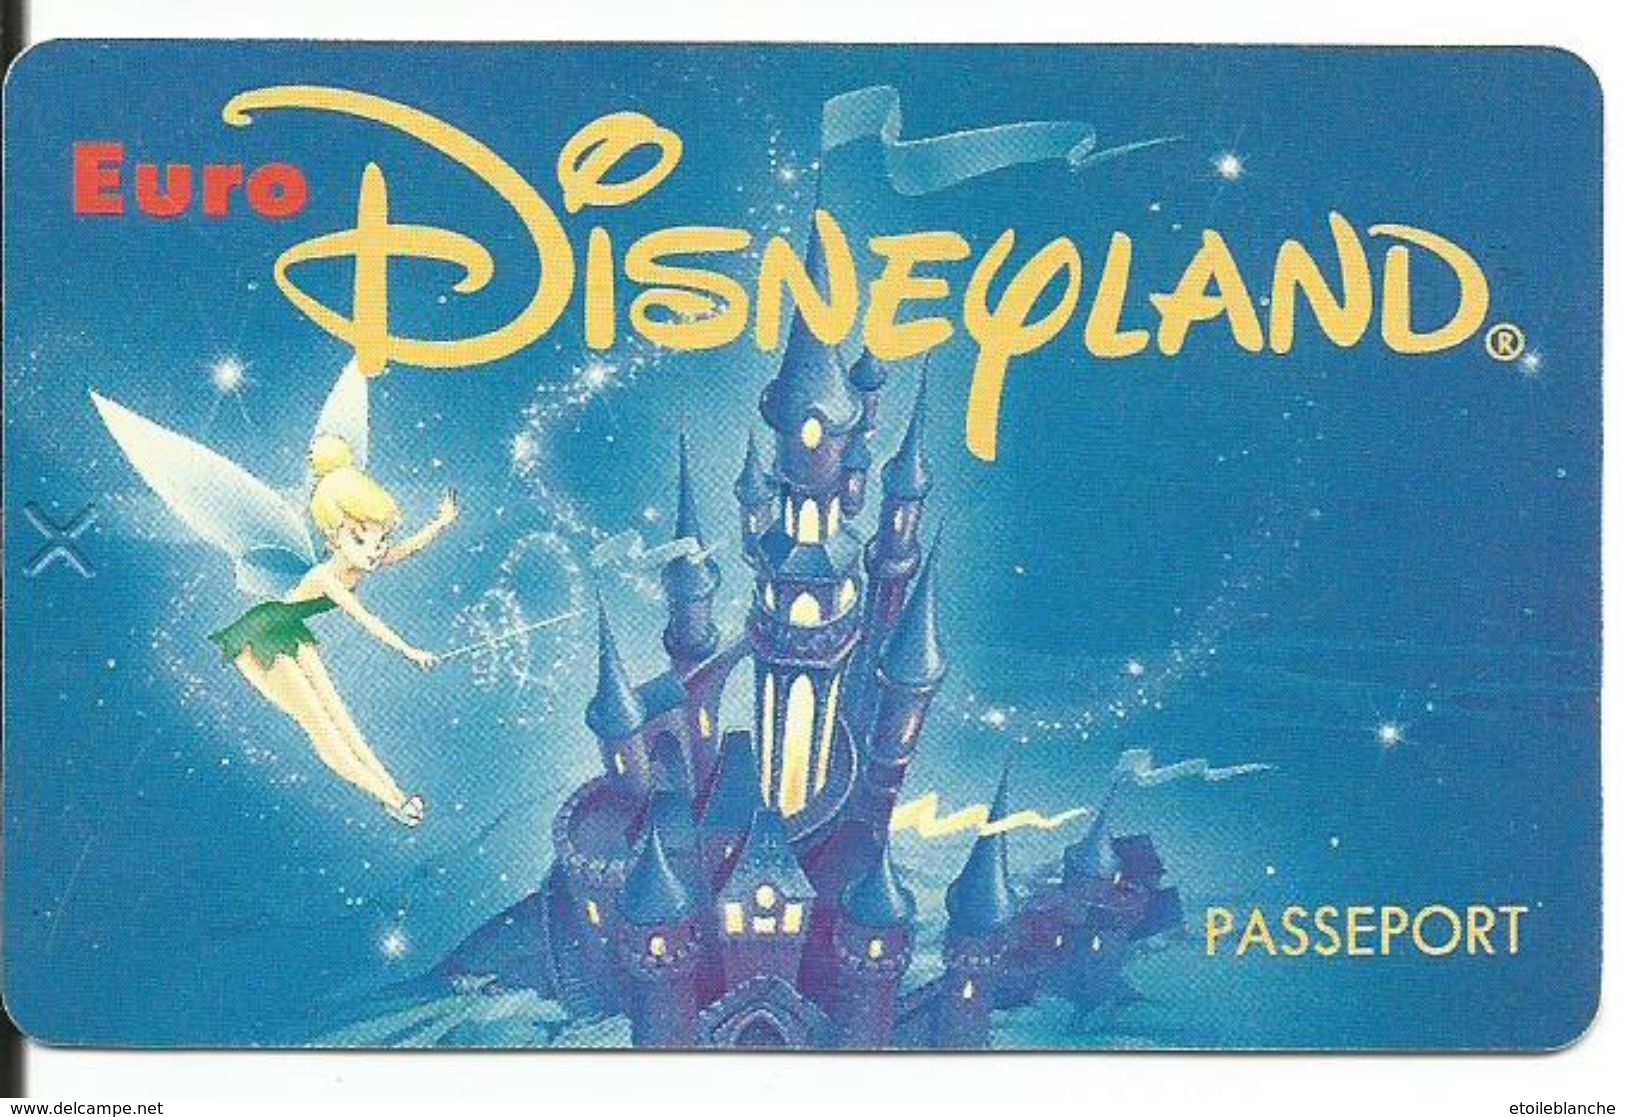 banner boycot vork Toegangskaarten - Ticket d'entrée, parc Disneyland Paris (fée clochette)  1992 - 225 Francs (Euro Disney France)